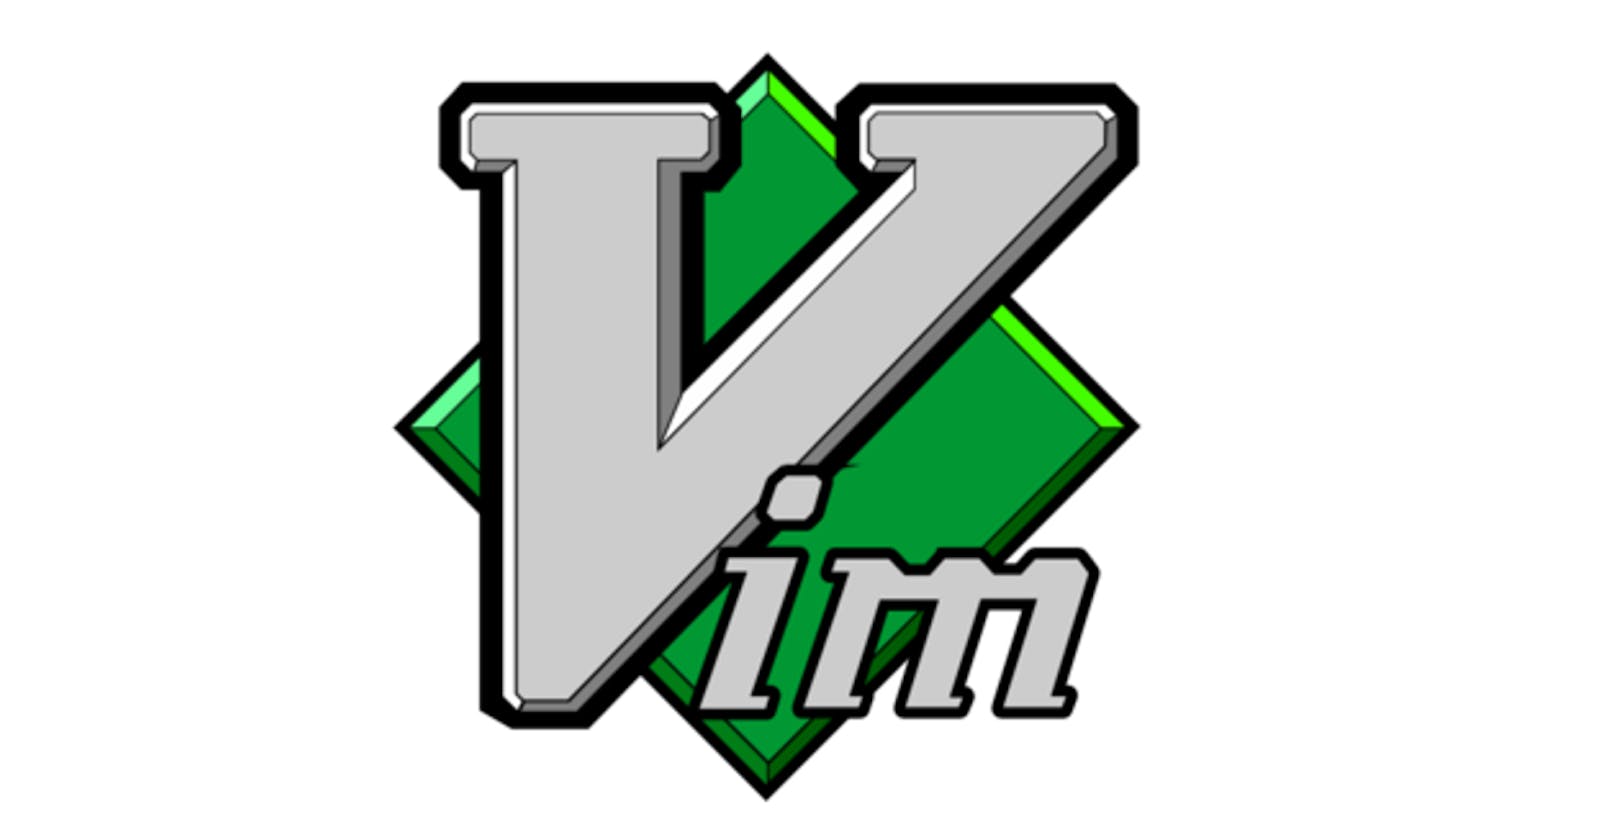 It's Vim! a big lump of modes